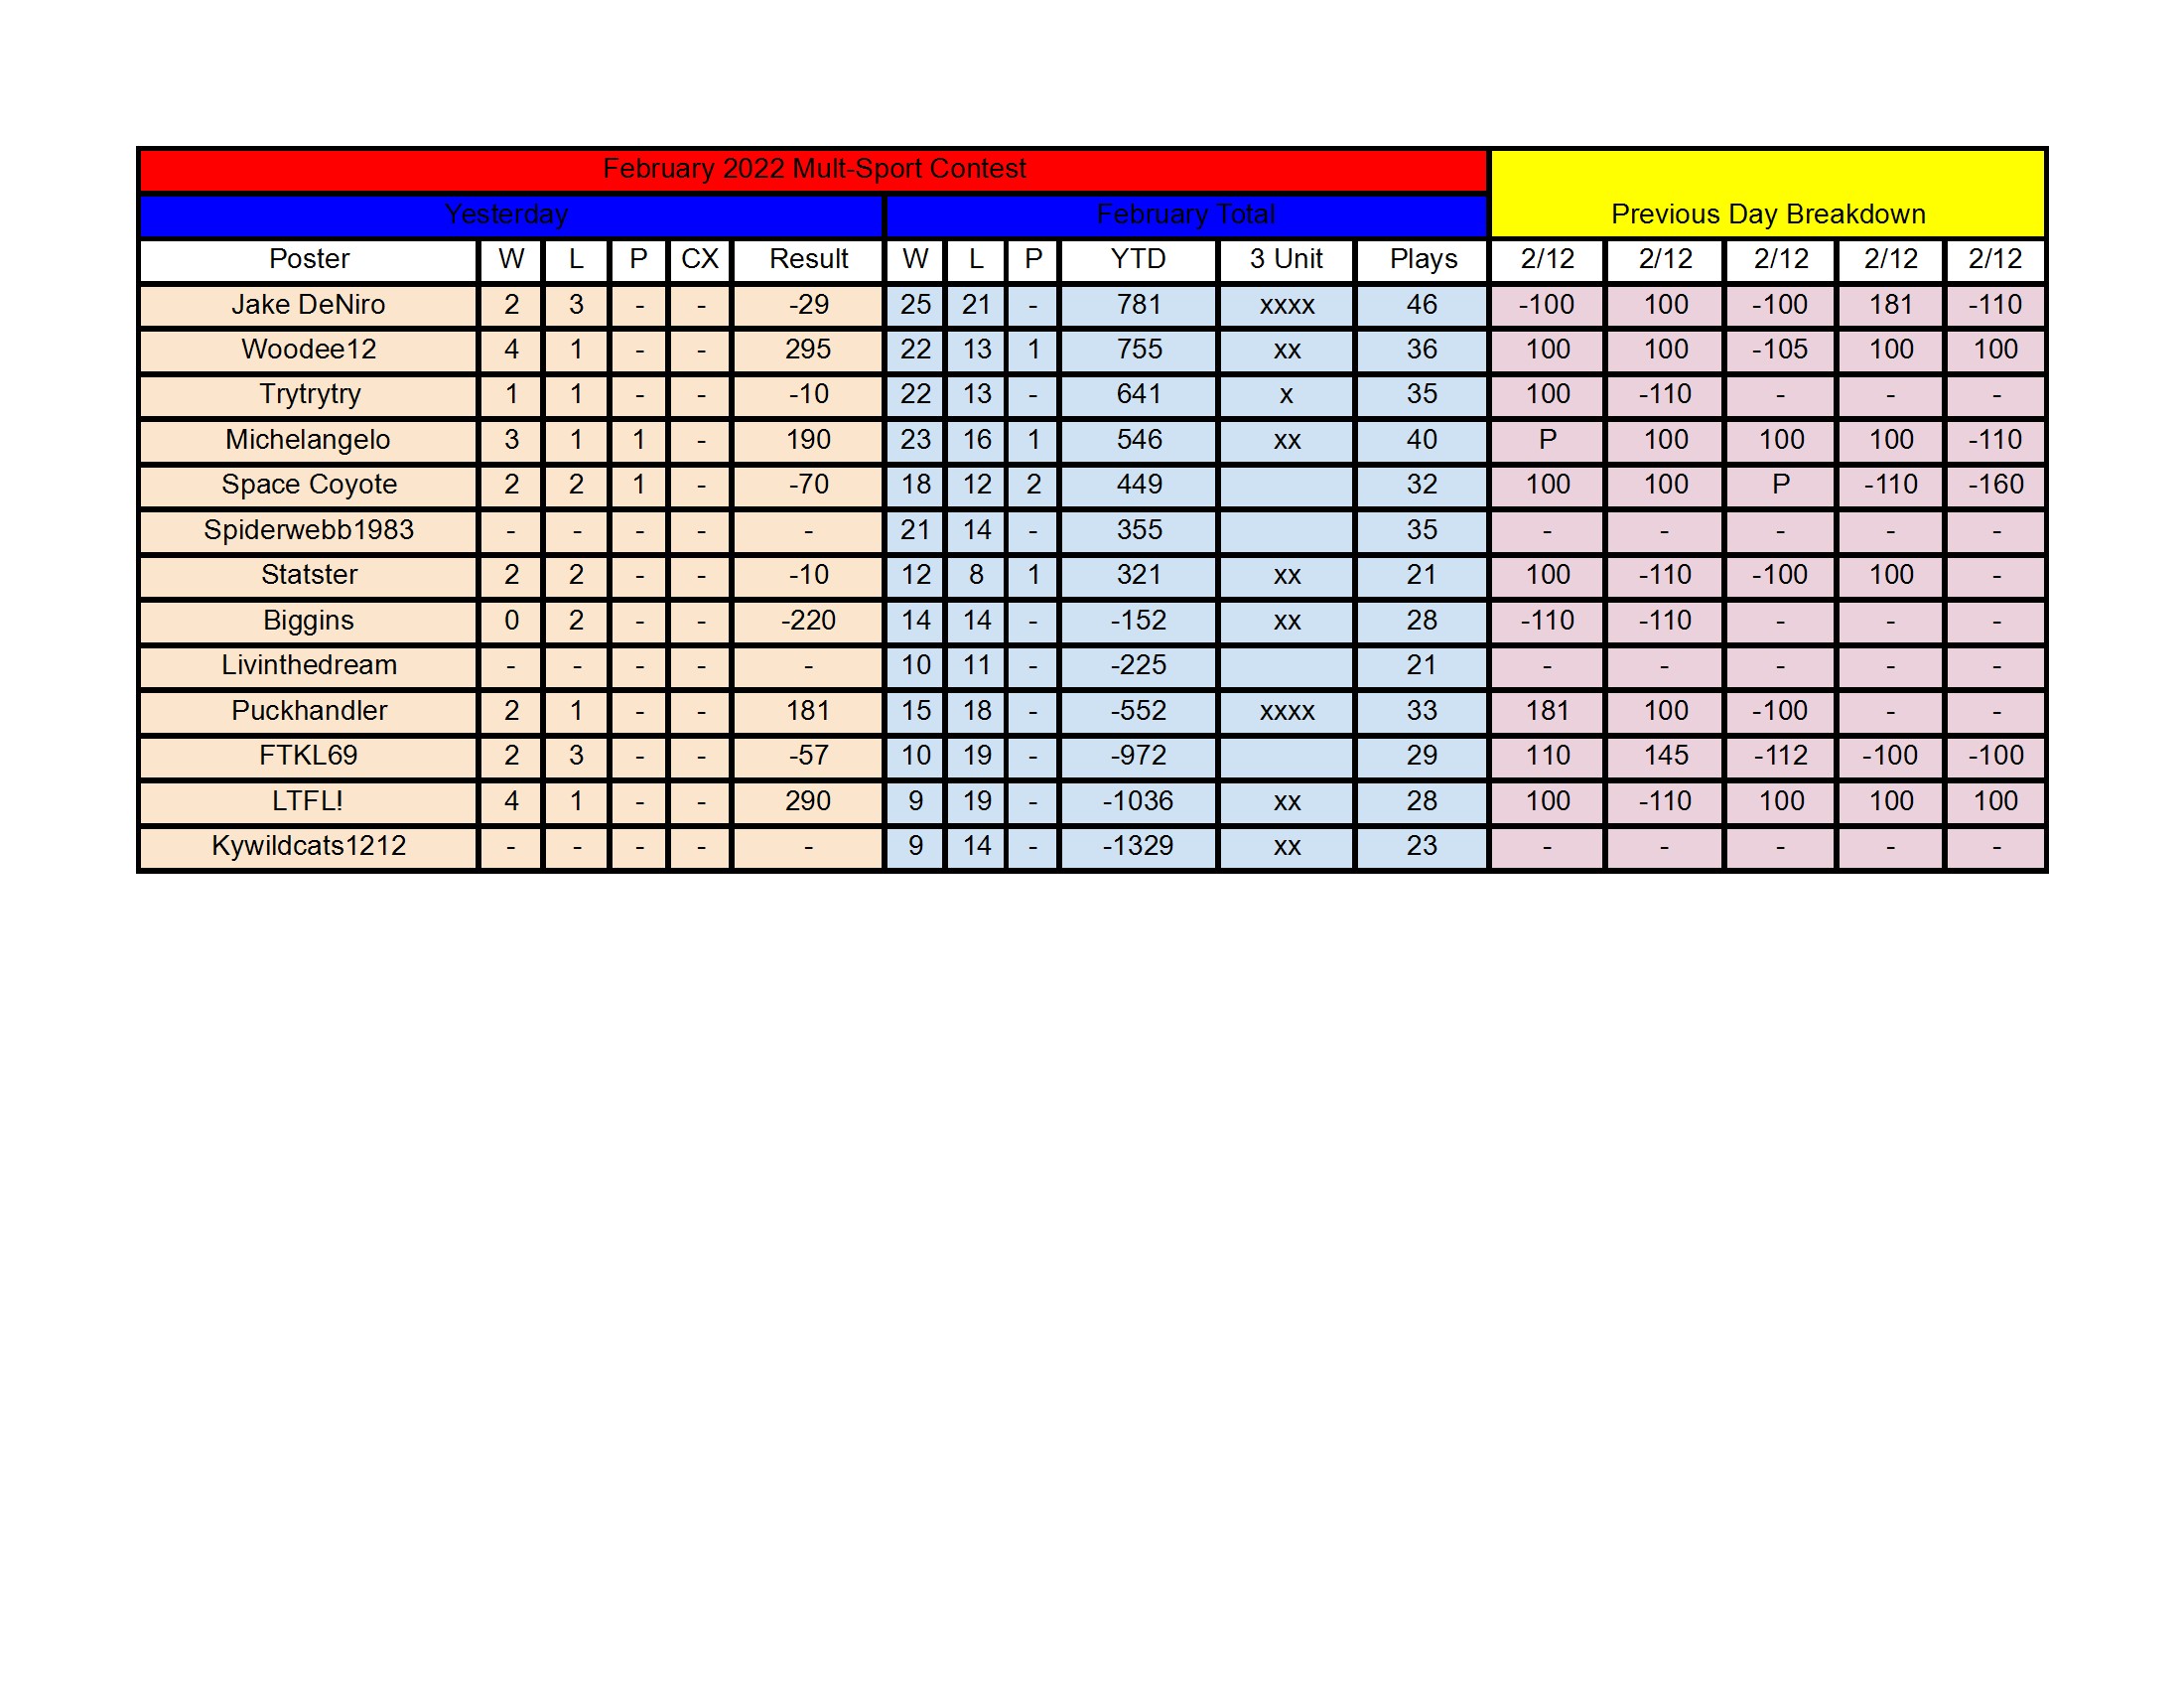 February Standings - 2_12 conv 1.jpeg